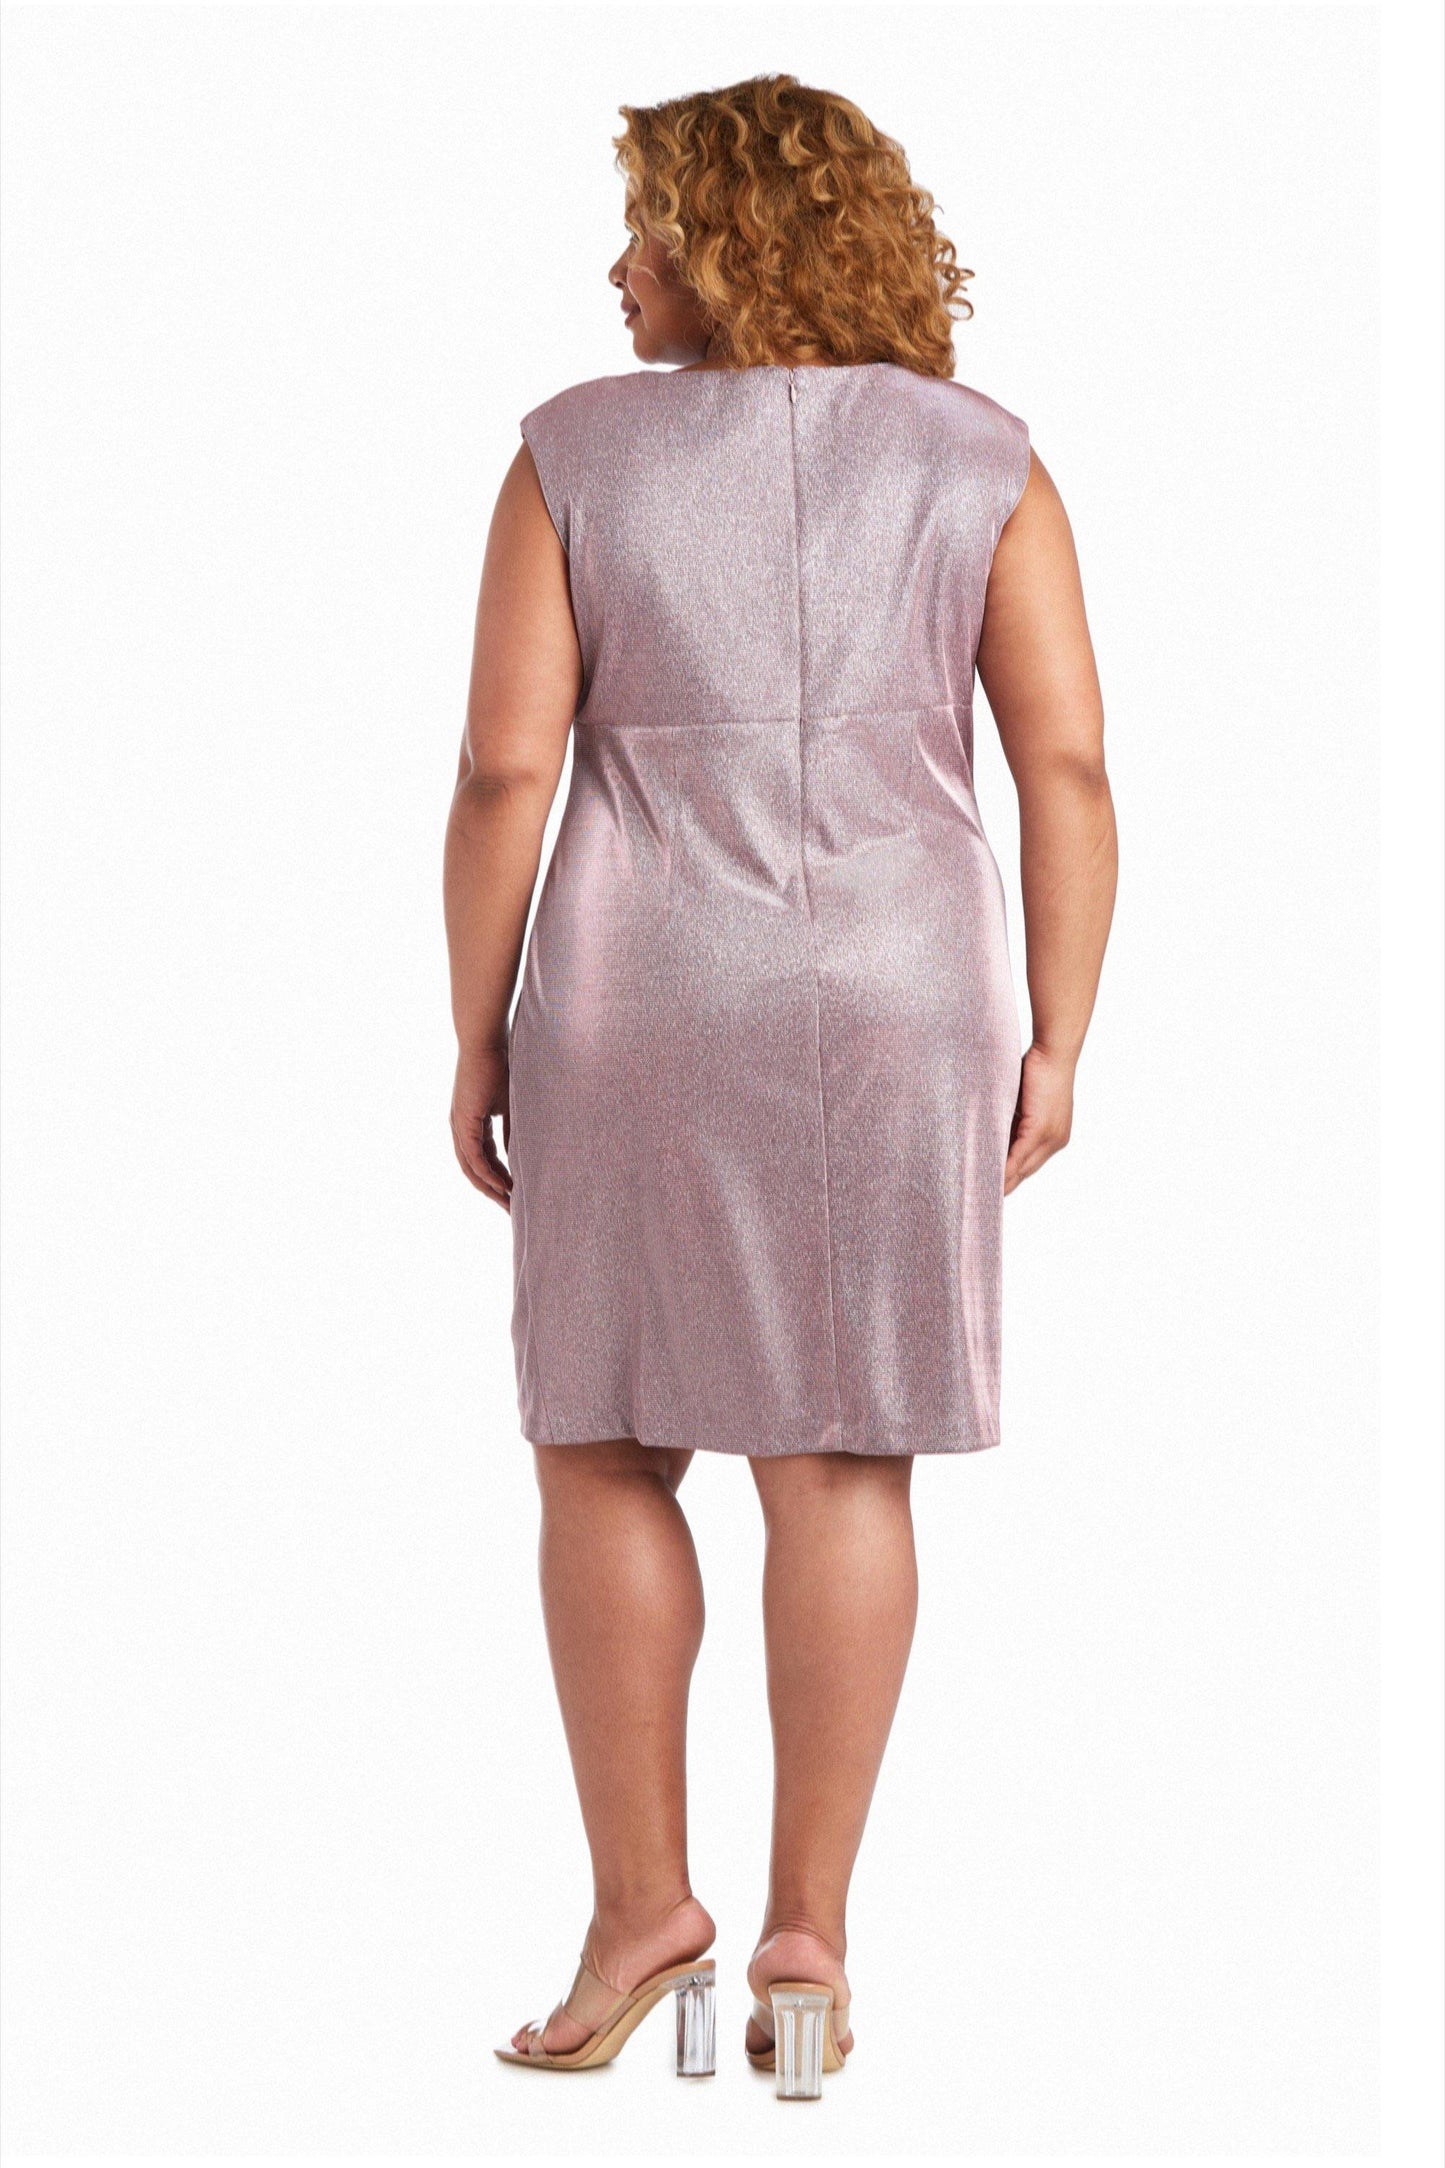 R&M Richards Short Plus Size Pleated Dress 2423W - The Dress Outlet